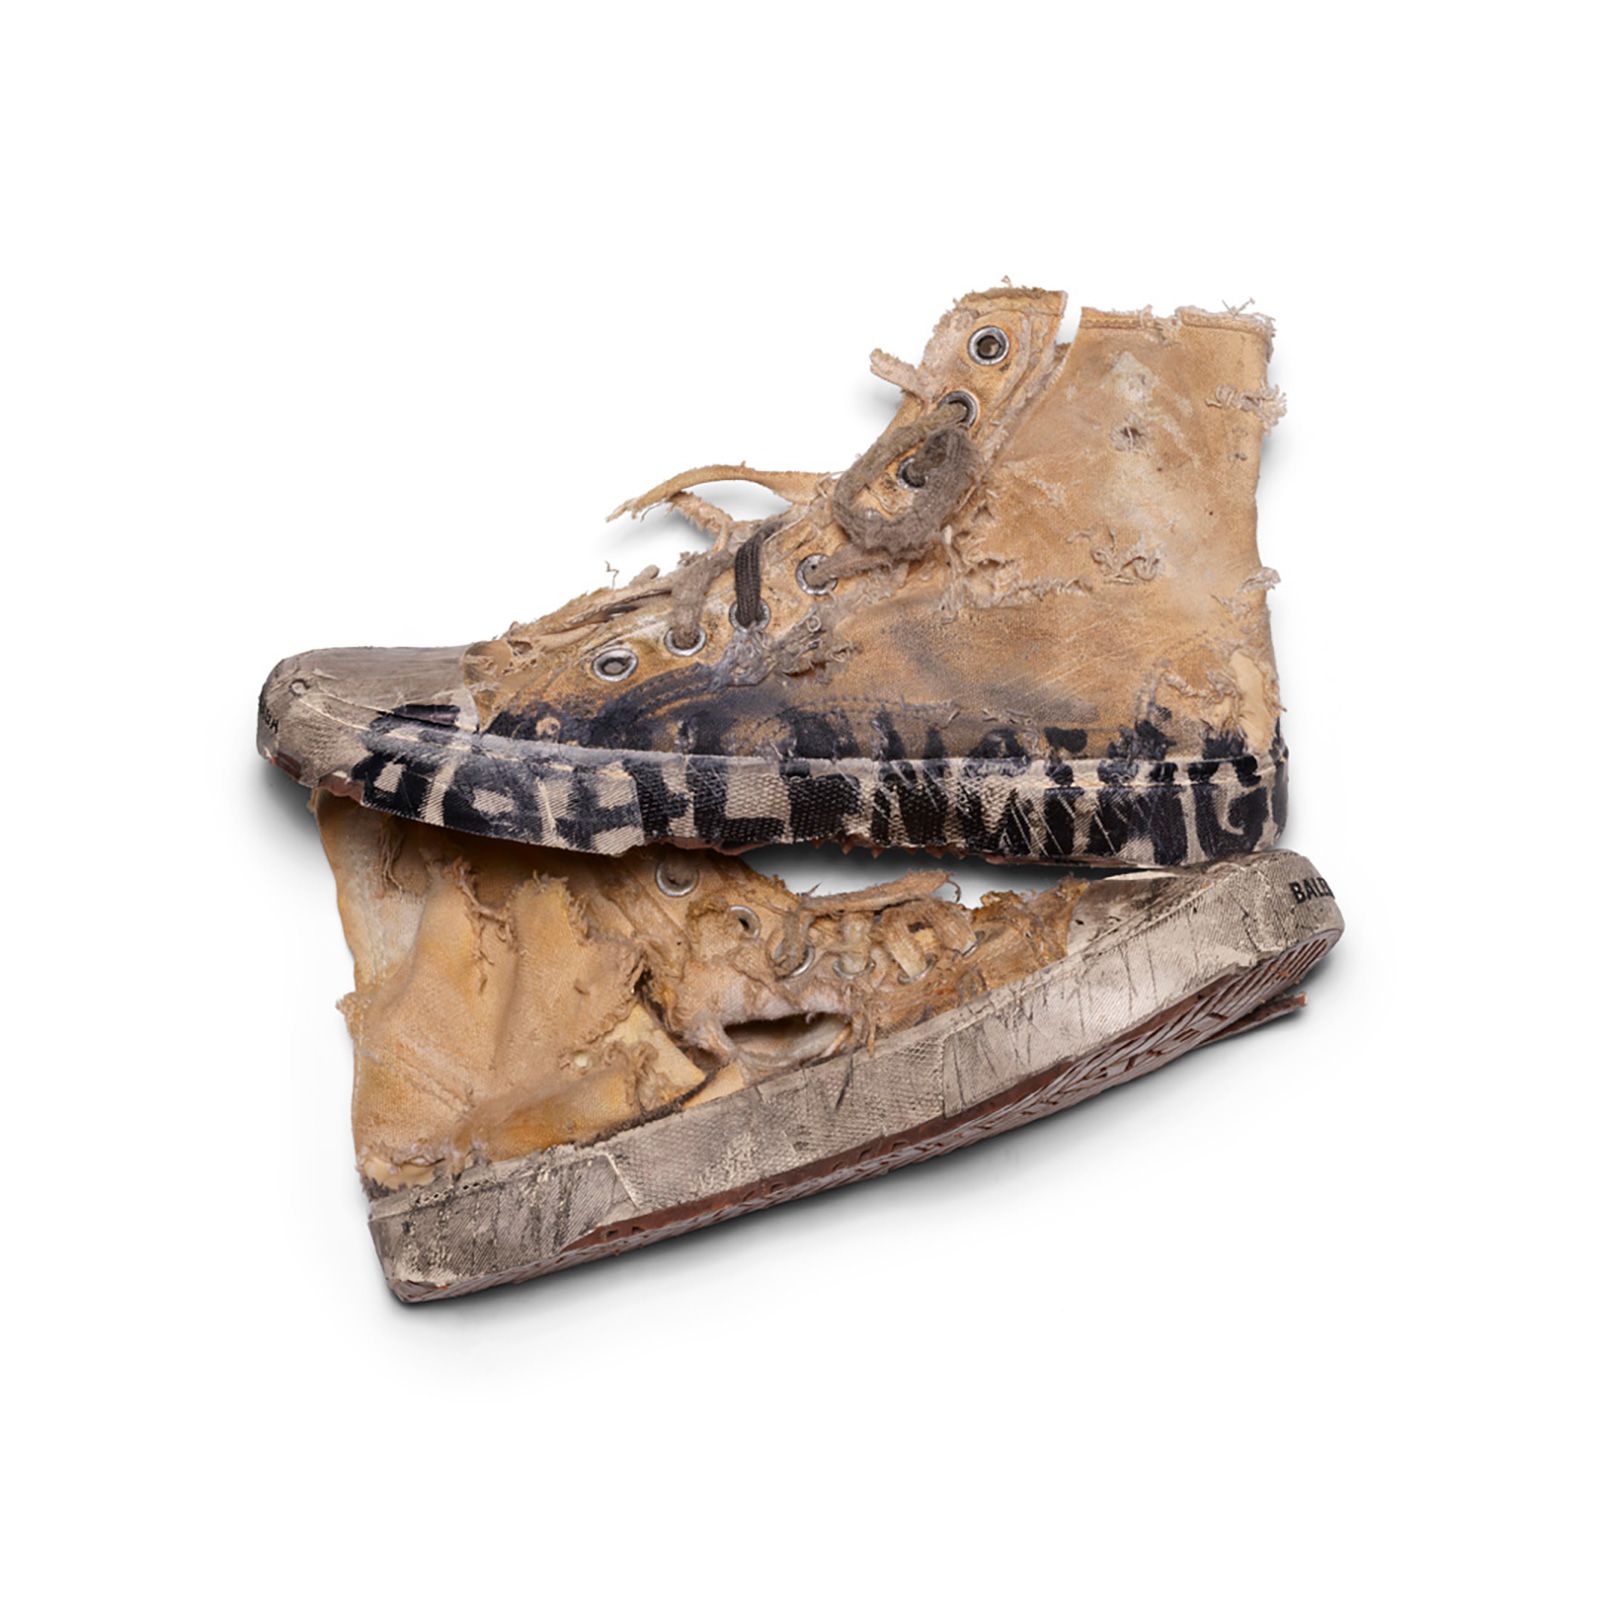 Zending leeuwerik vals Balenciaga selling destroyed sneakers for $1,850 | CNN